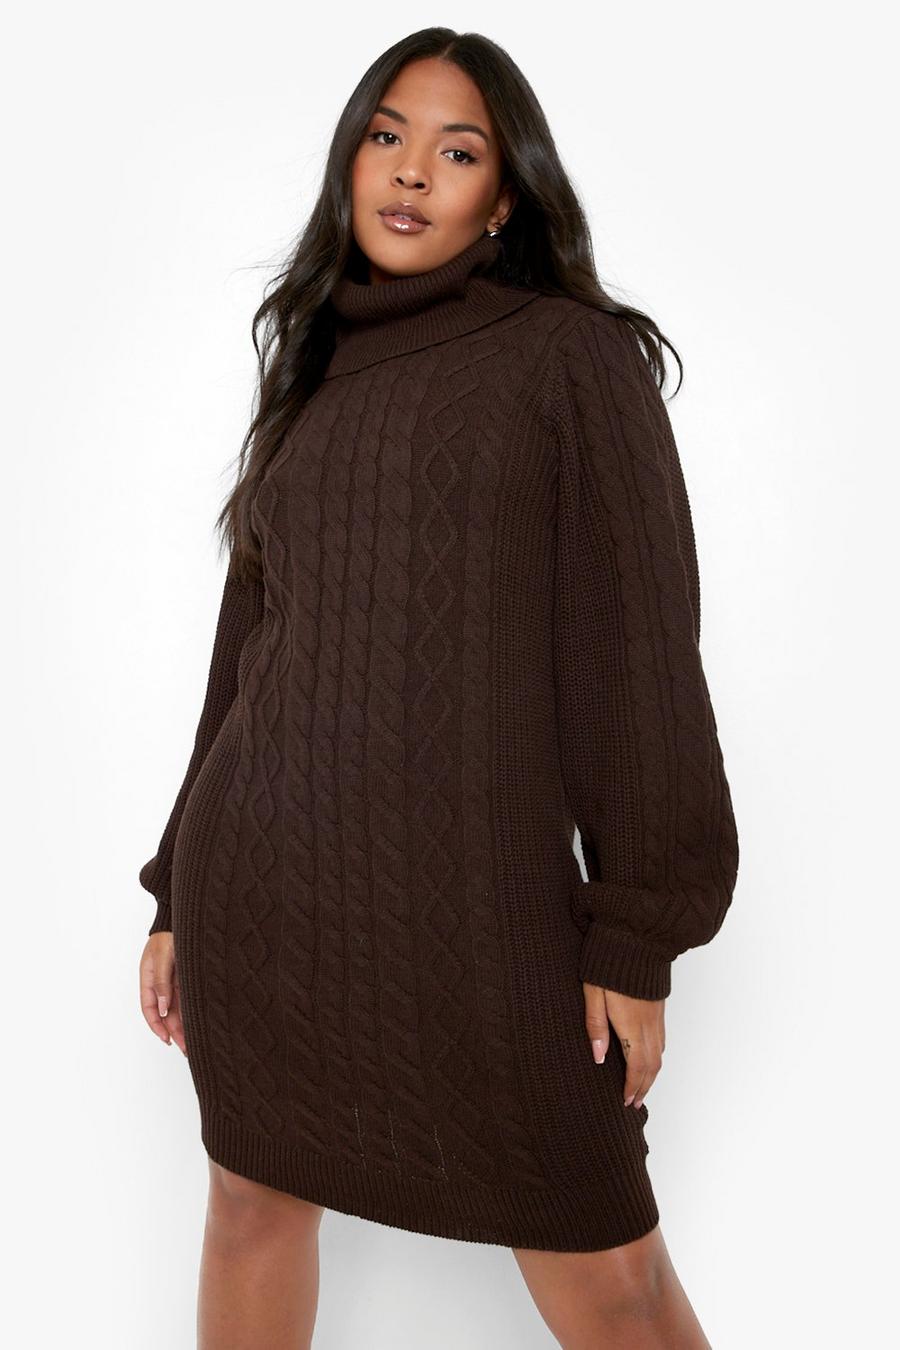 https://media.boohoo.com/i/boohoo/pzz05562_chocolate_xl/female-chocolate-plus-recycled-cable-knit-sweater-dress/?w=900&qlt=default&fmt.jp2.qlt=70&fmt=auto&sm=fit